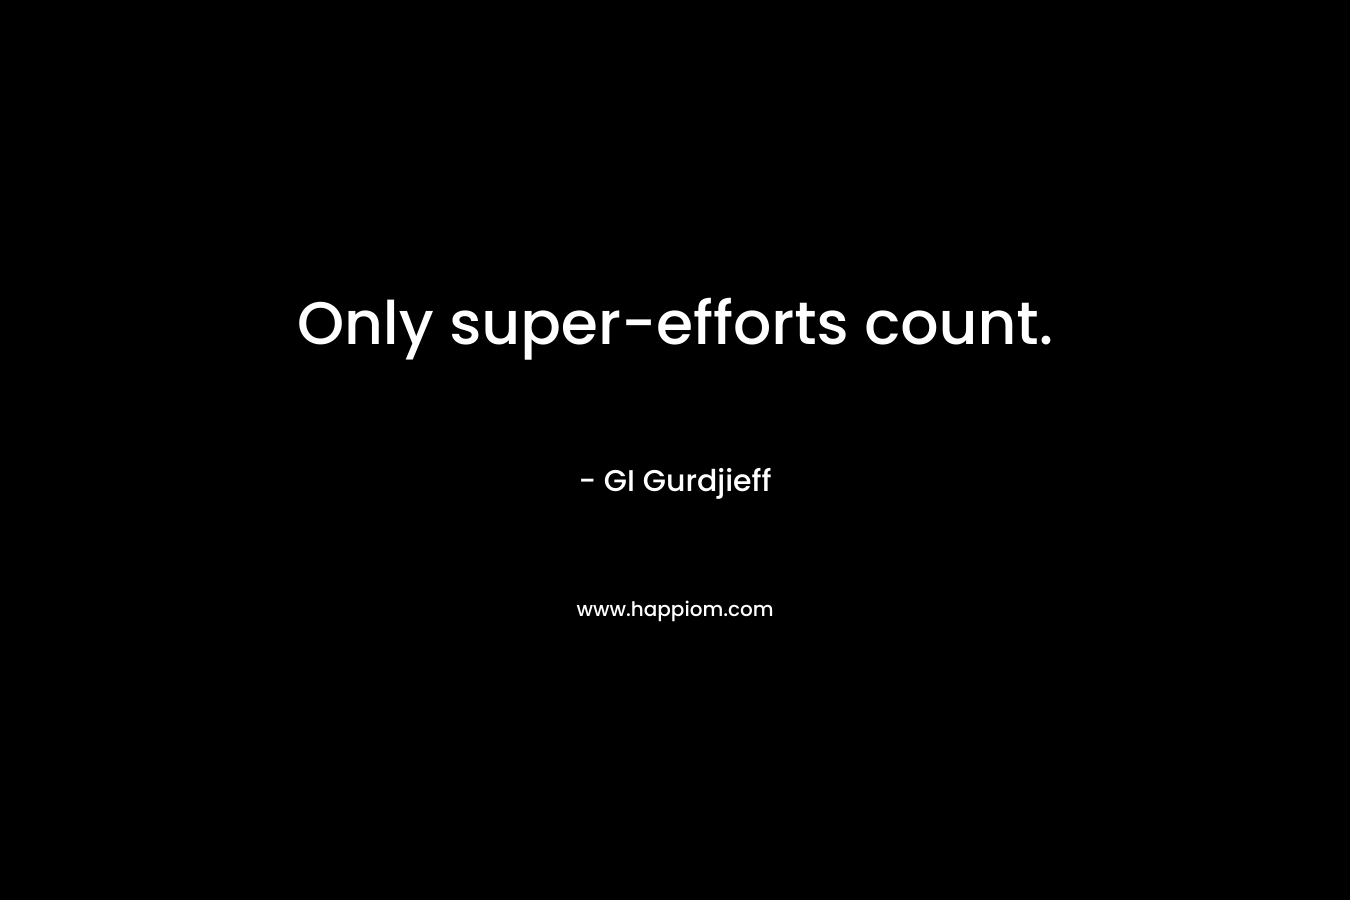 Only super-efforts count.